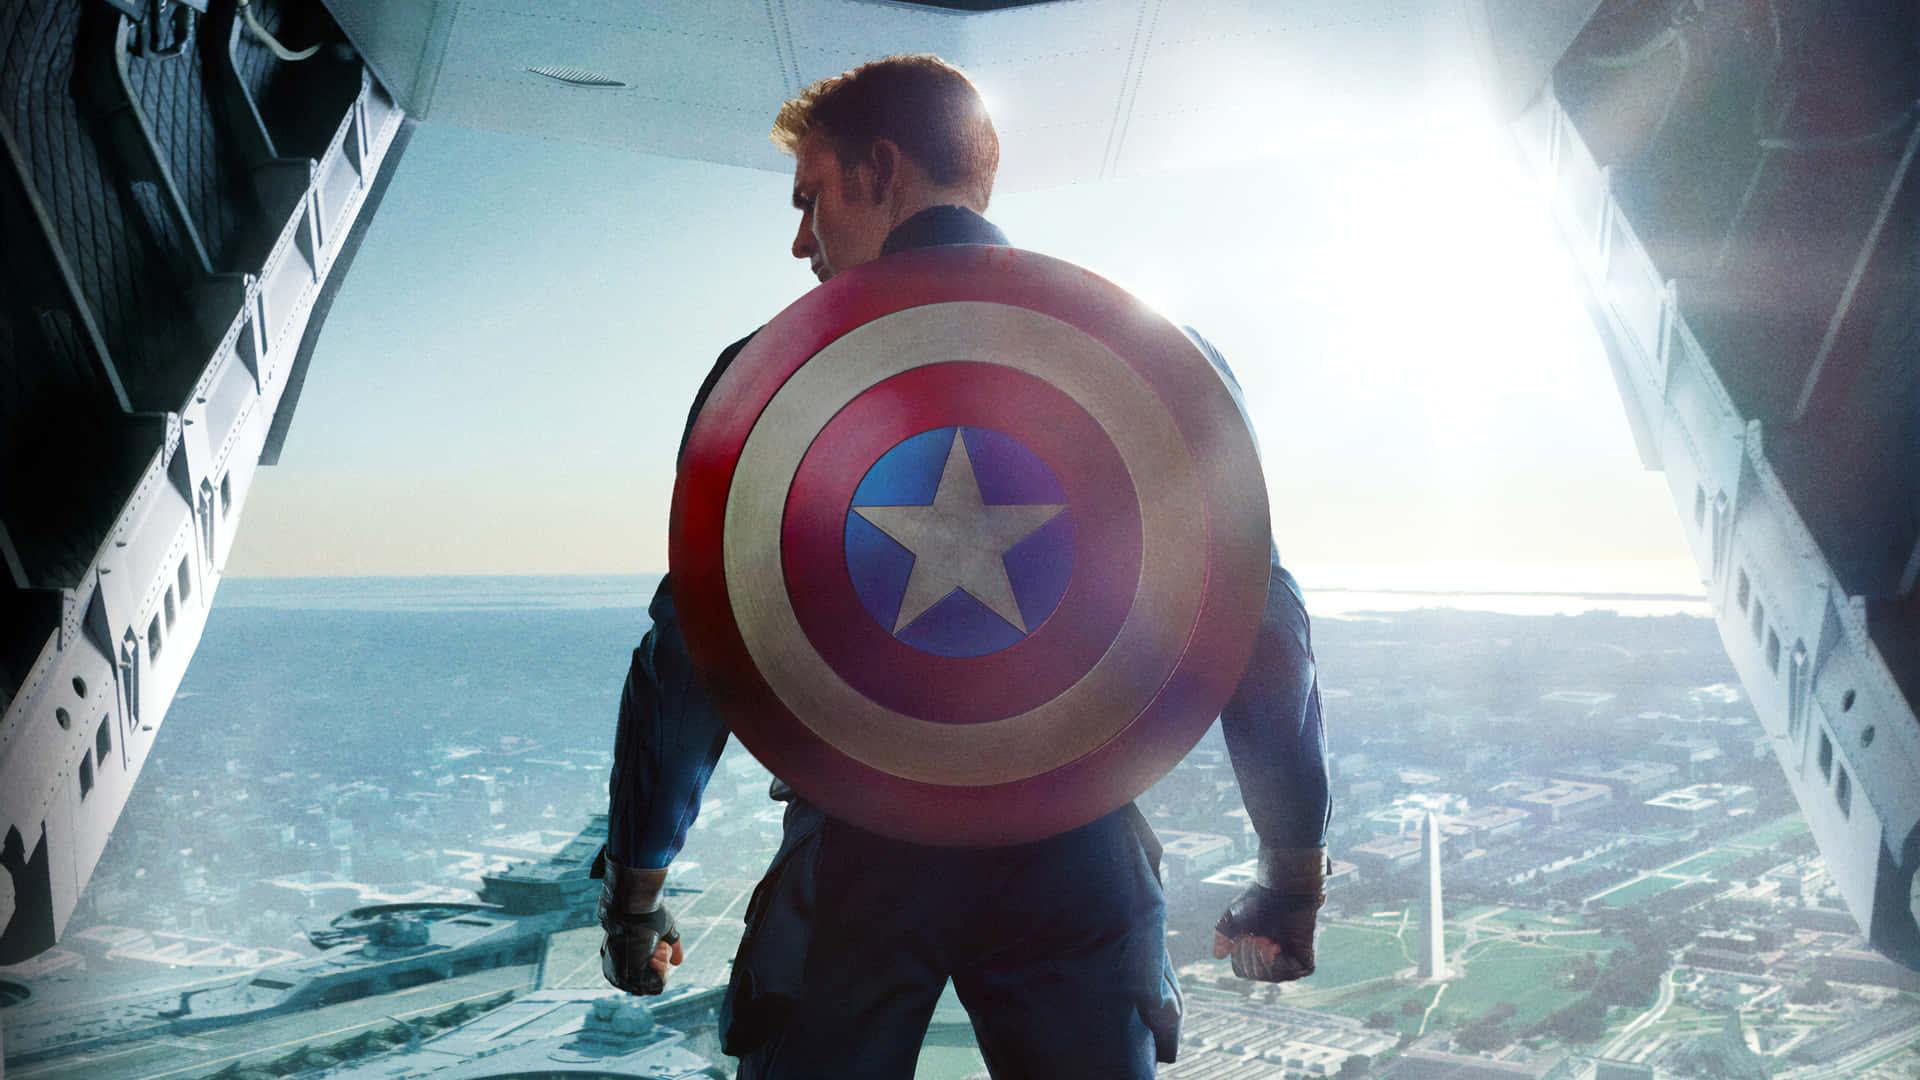 Free 4k Captain America Wallpaper Downloads, [100+] 4k Captain America  Wallpapers for FREE 